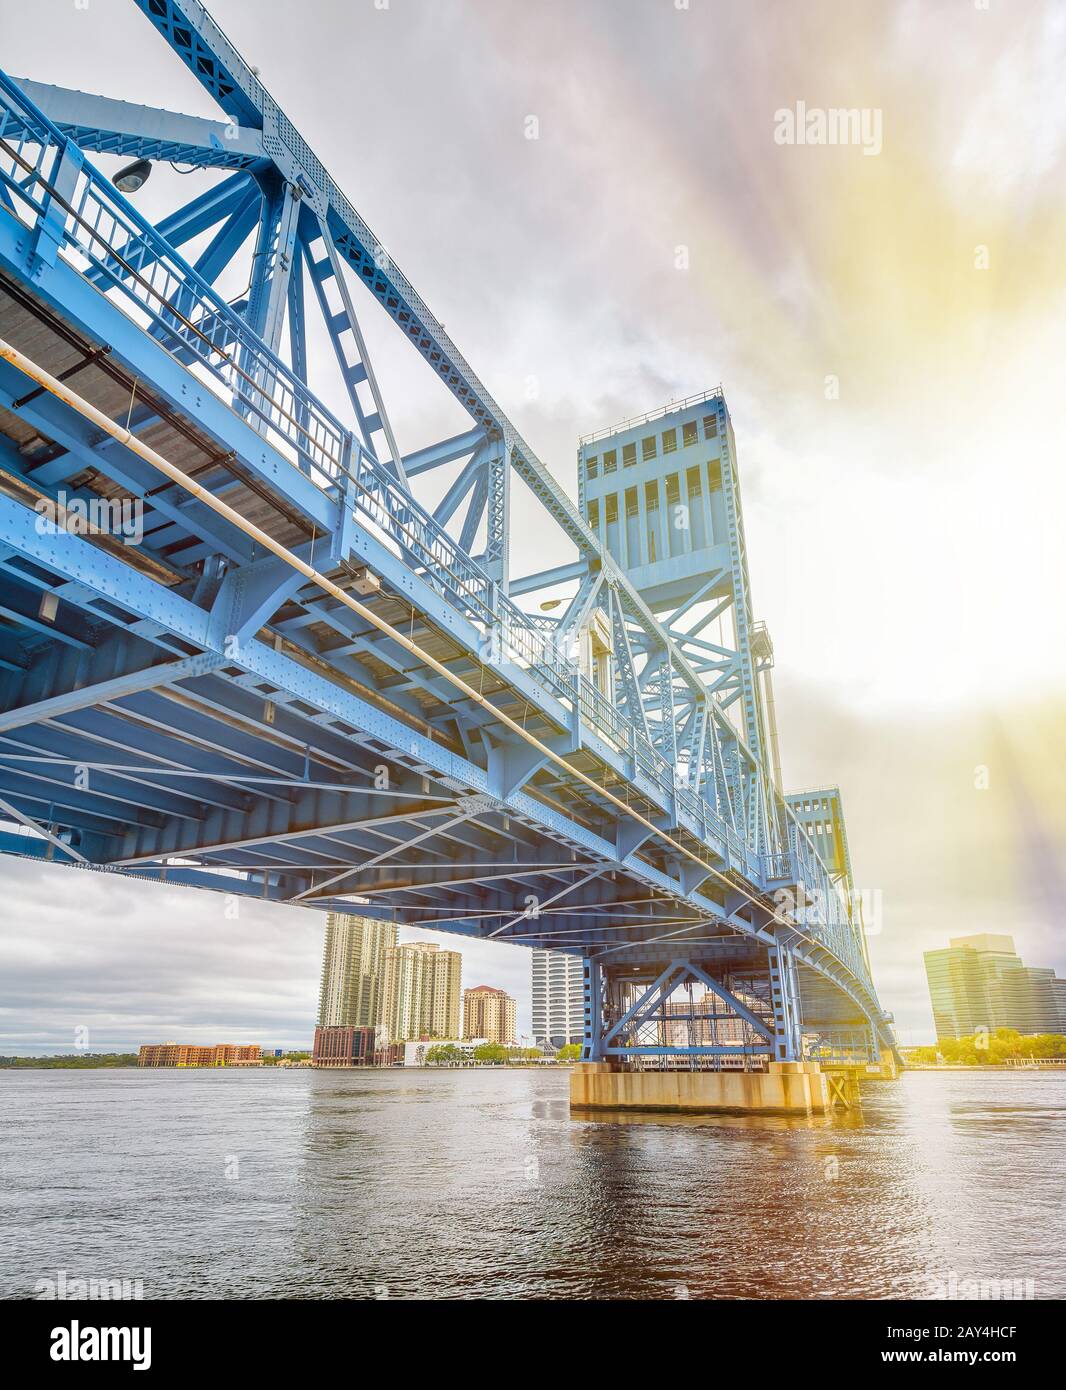 John T. Alsop Jr. Bridge in Jacksonville, FL. It is a bridge crossing the St. Johns River . Stock Photo